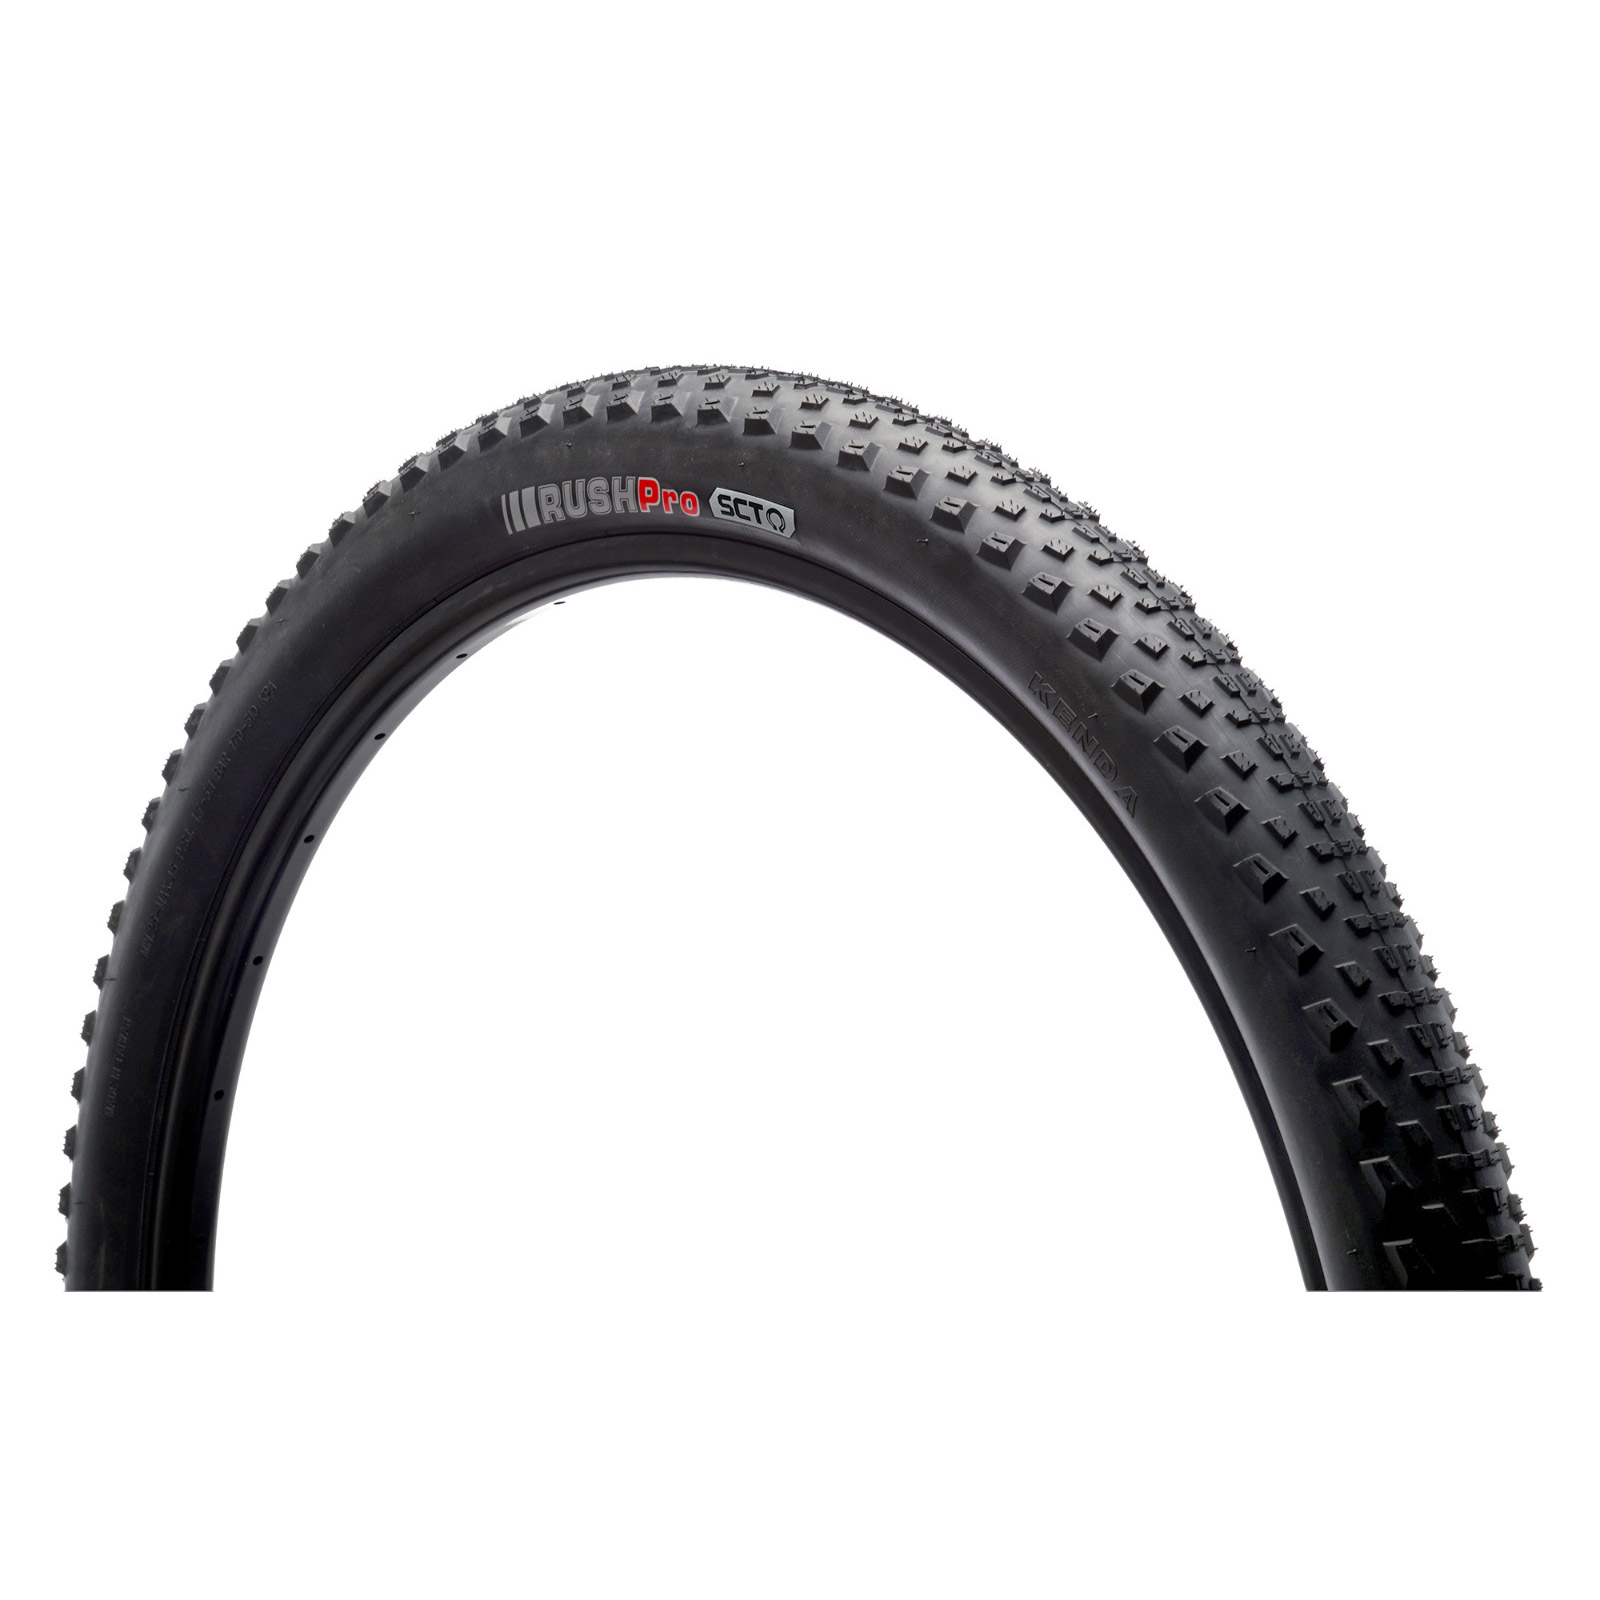 Productfoto van Kenda Rush Pro SCT Folding Tire - 29x2.20 Inch | 56-622